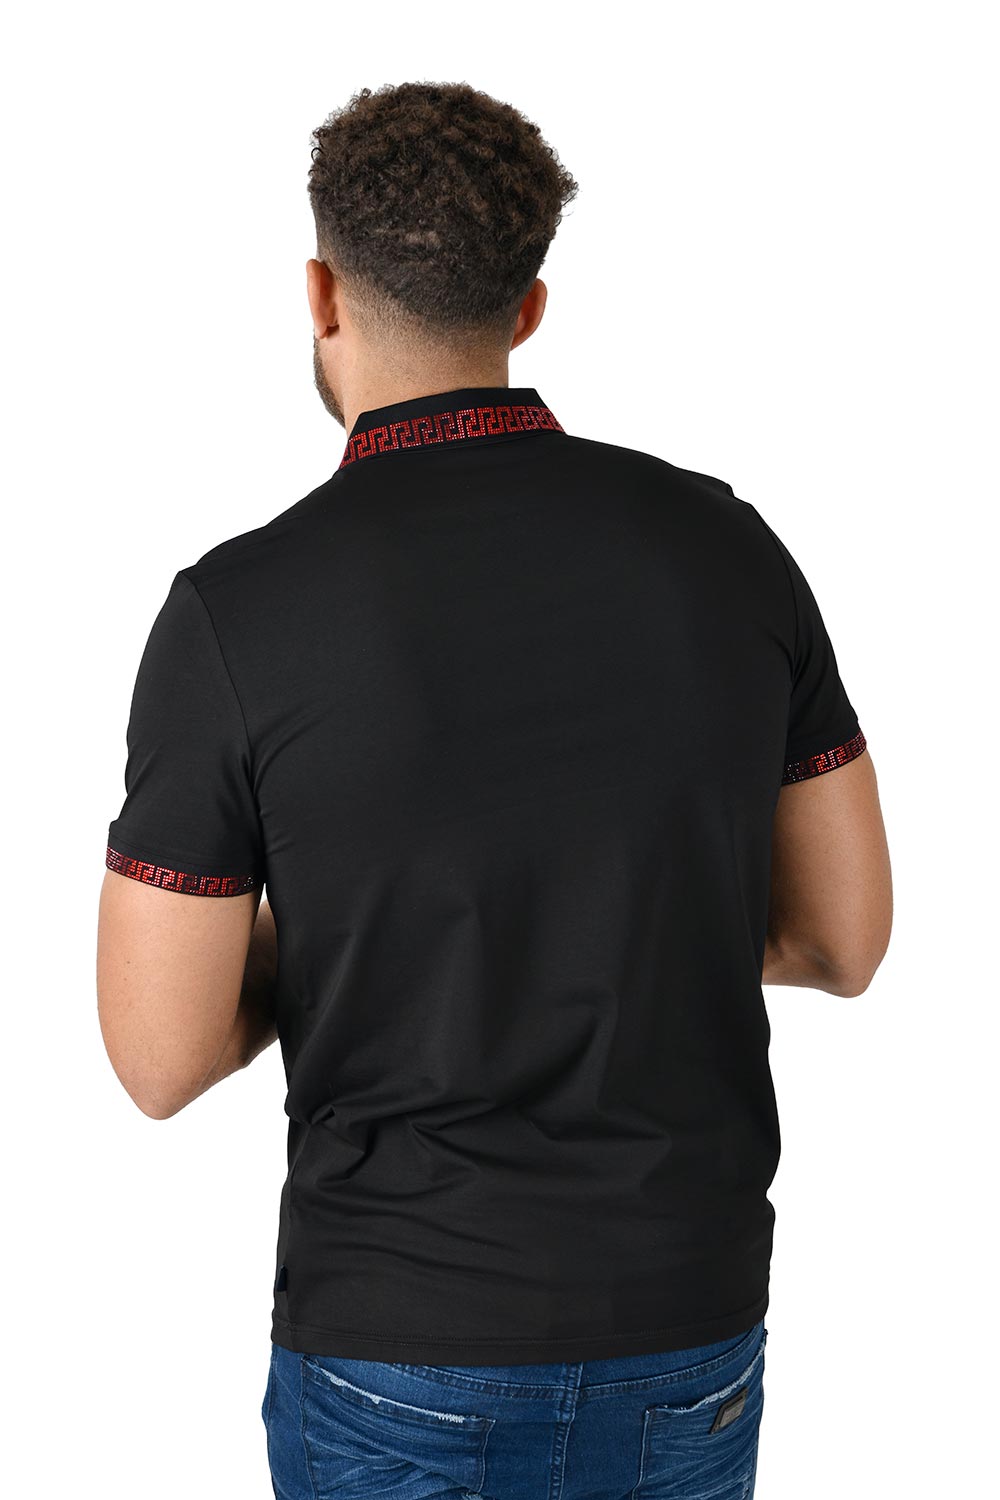 BARABAS men's rhinestone Greek key pattern polo shirt PS118 Black red